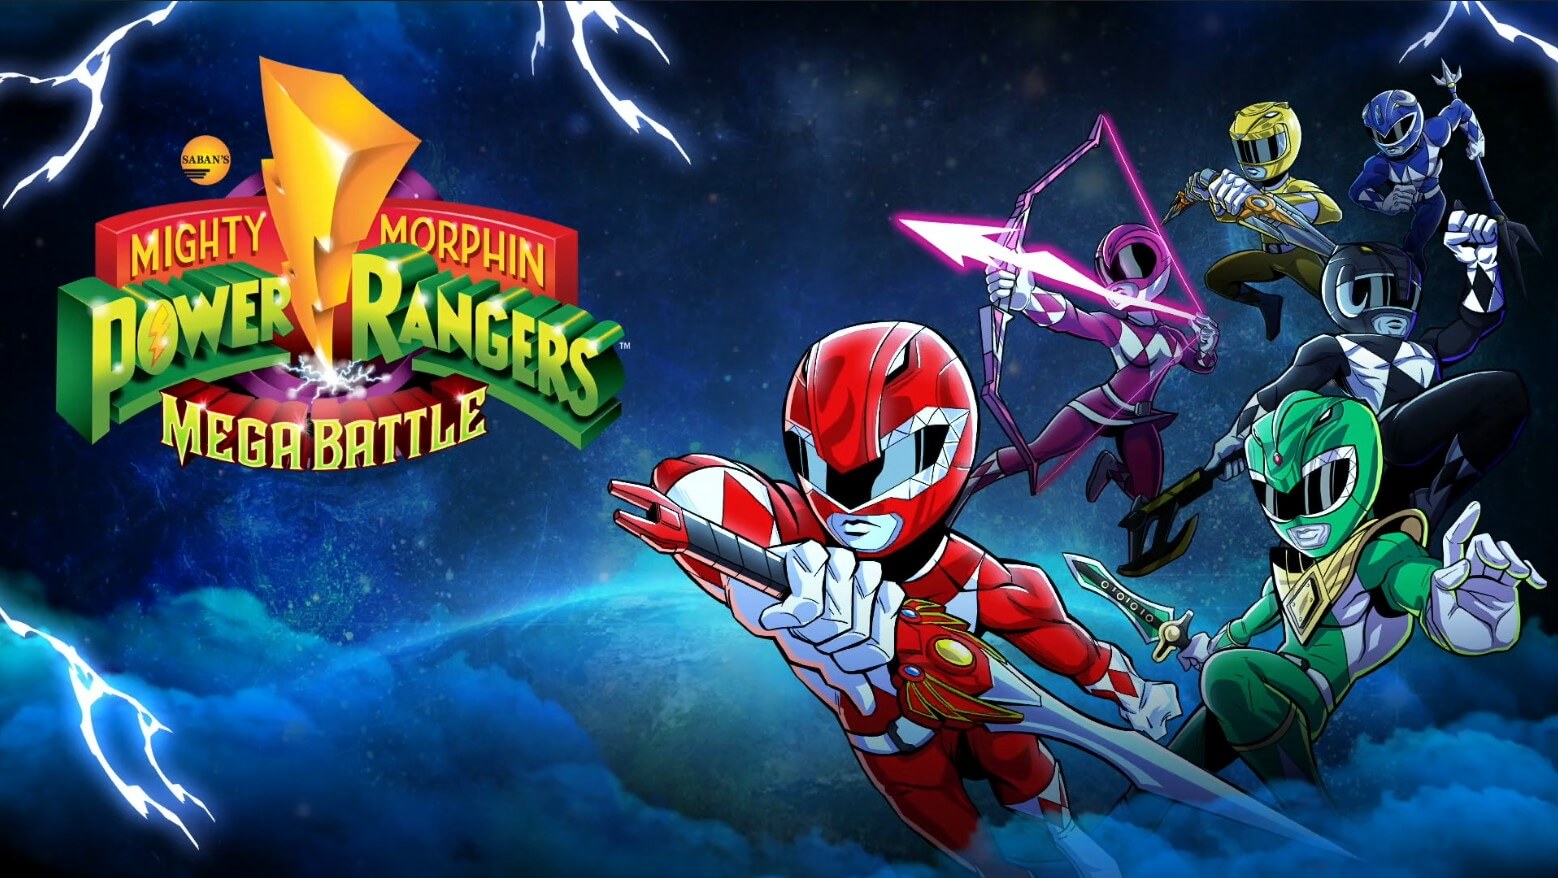 Saban's Mighty Morphin Power Rangers Mega Battle